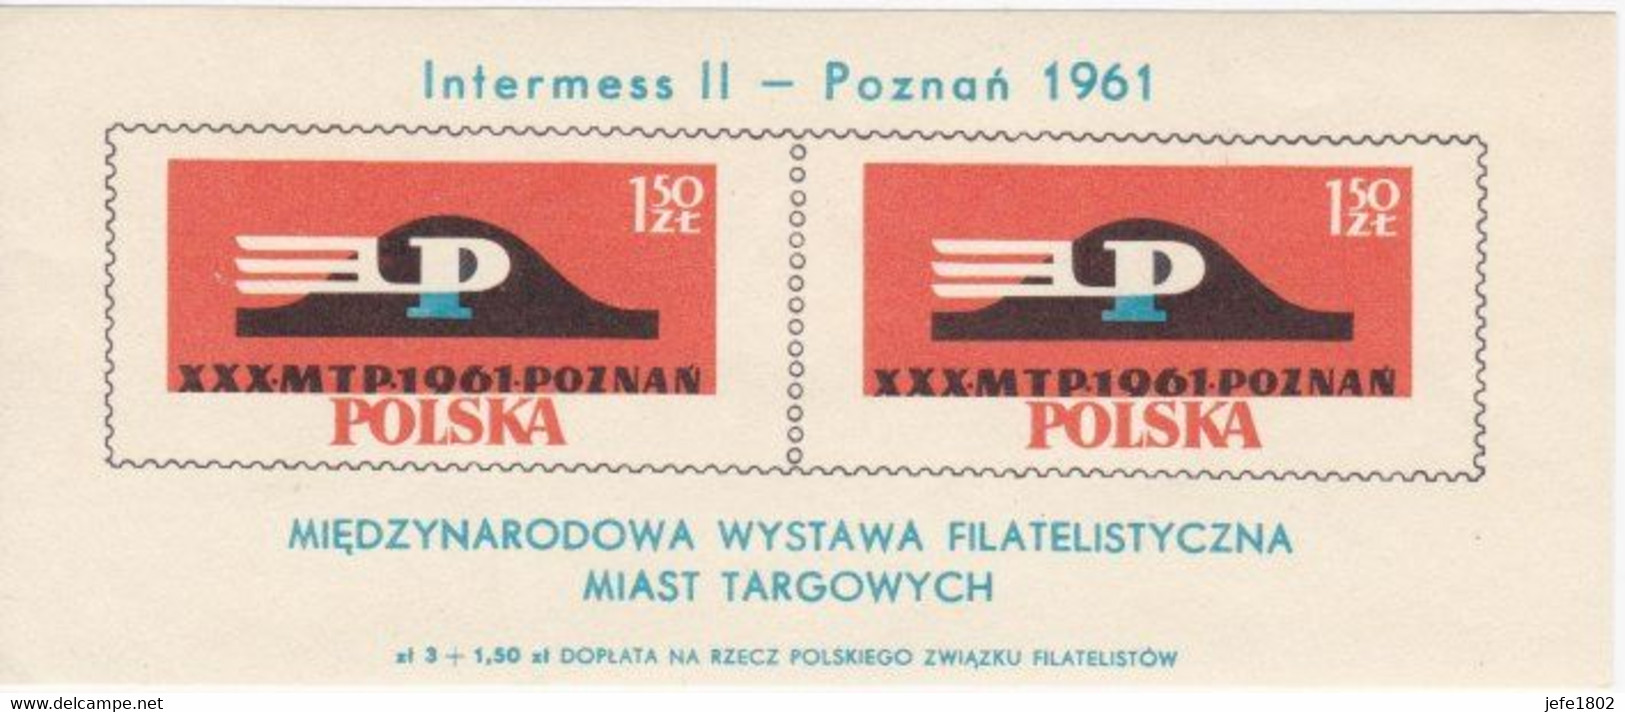 Intermesss II - Poznan 1961 - Carnets